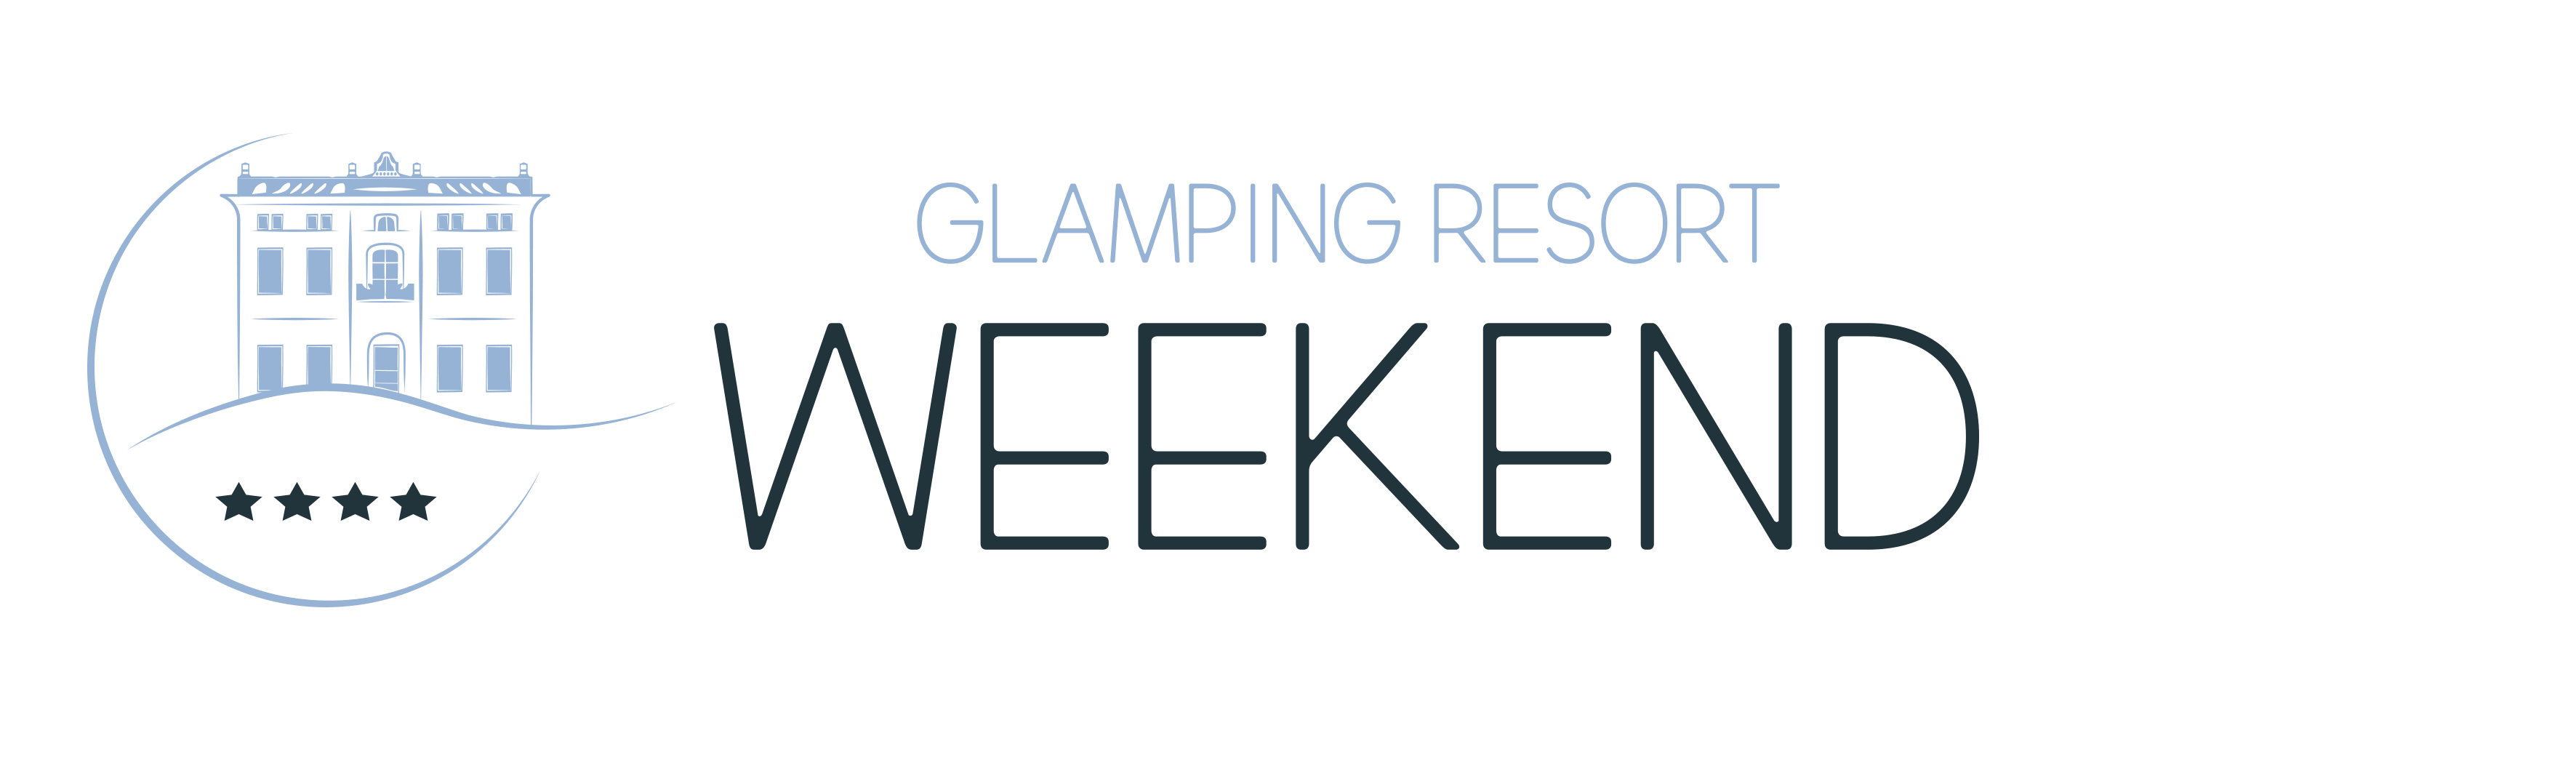 Weekend Glamping Resort